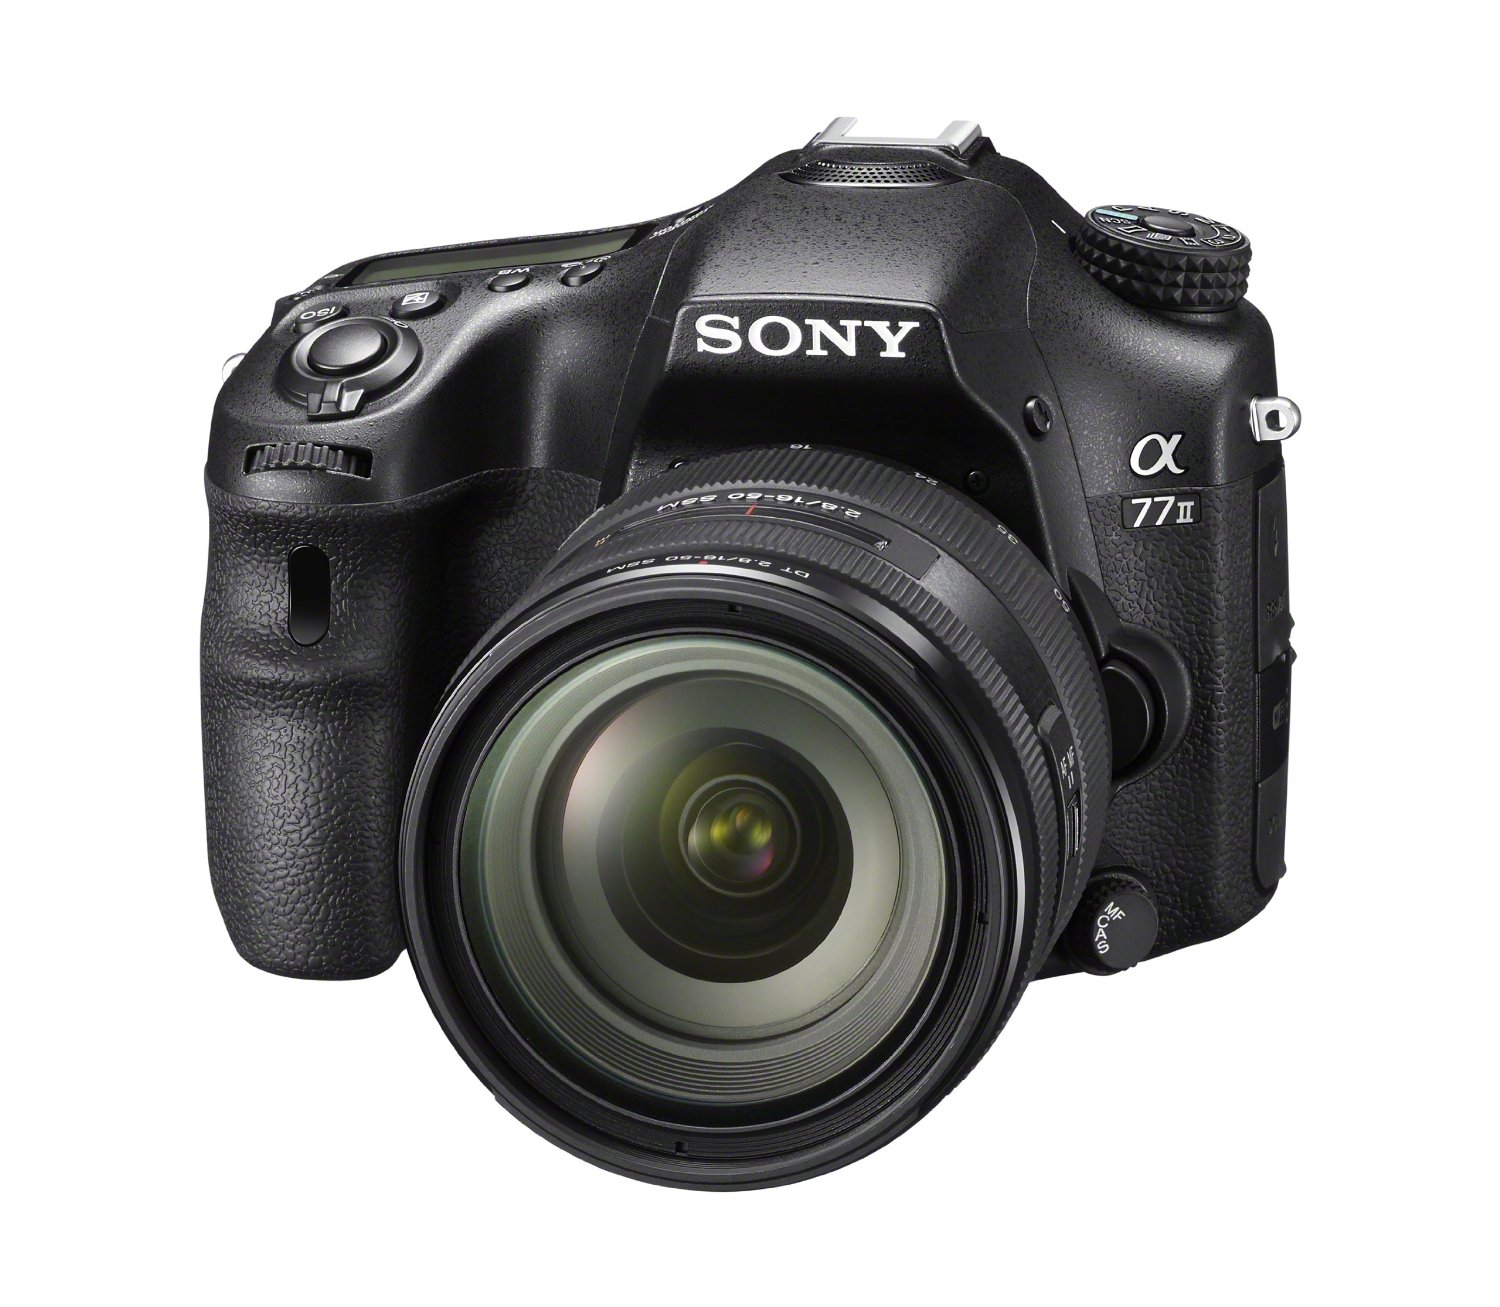 Sony SLT-A77 II Digital Camera